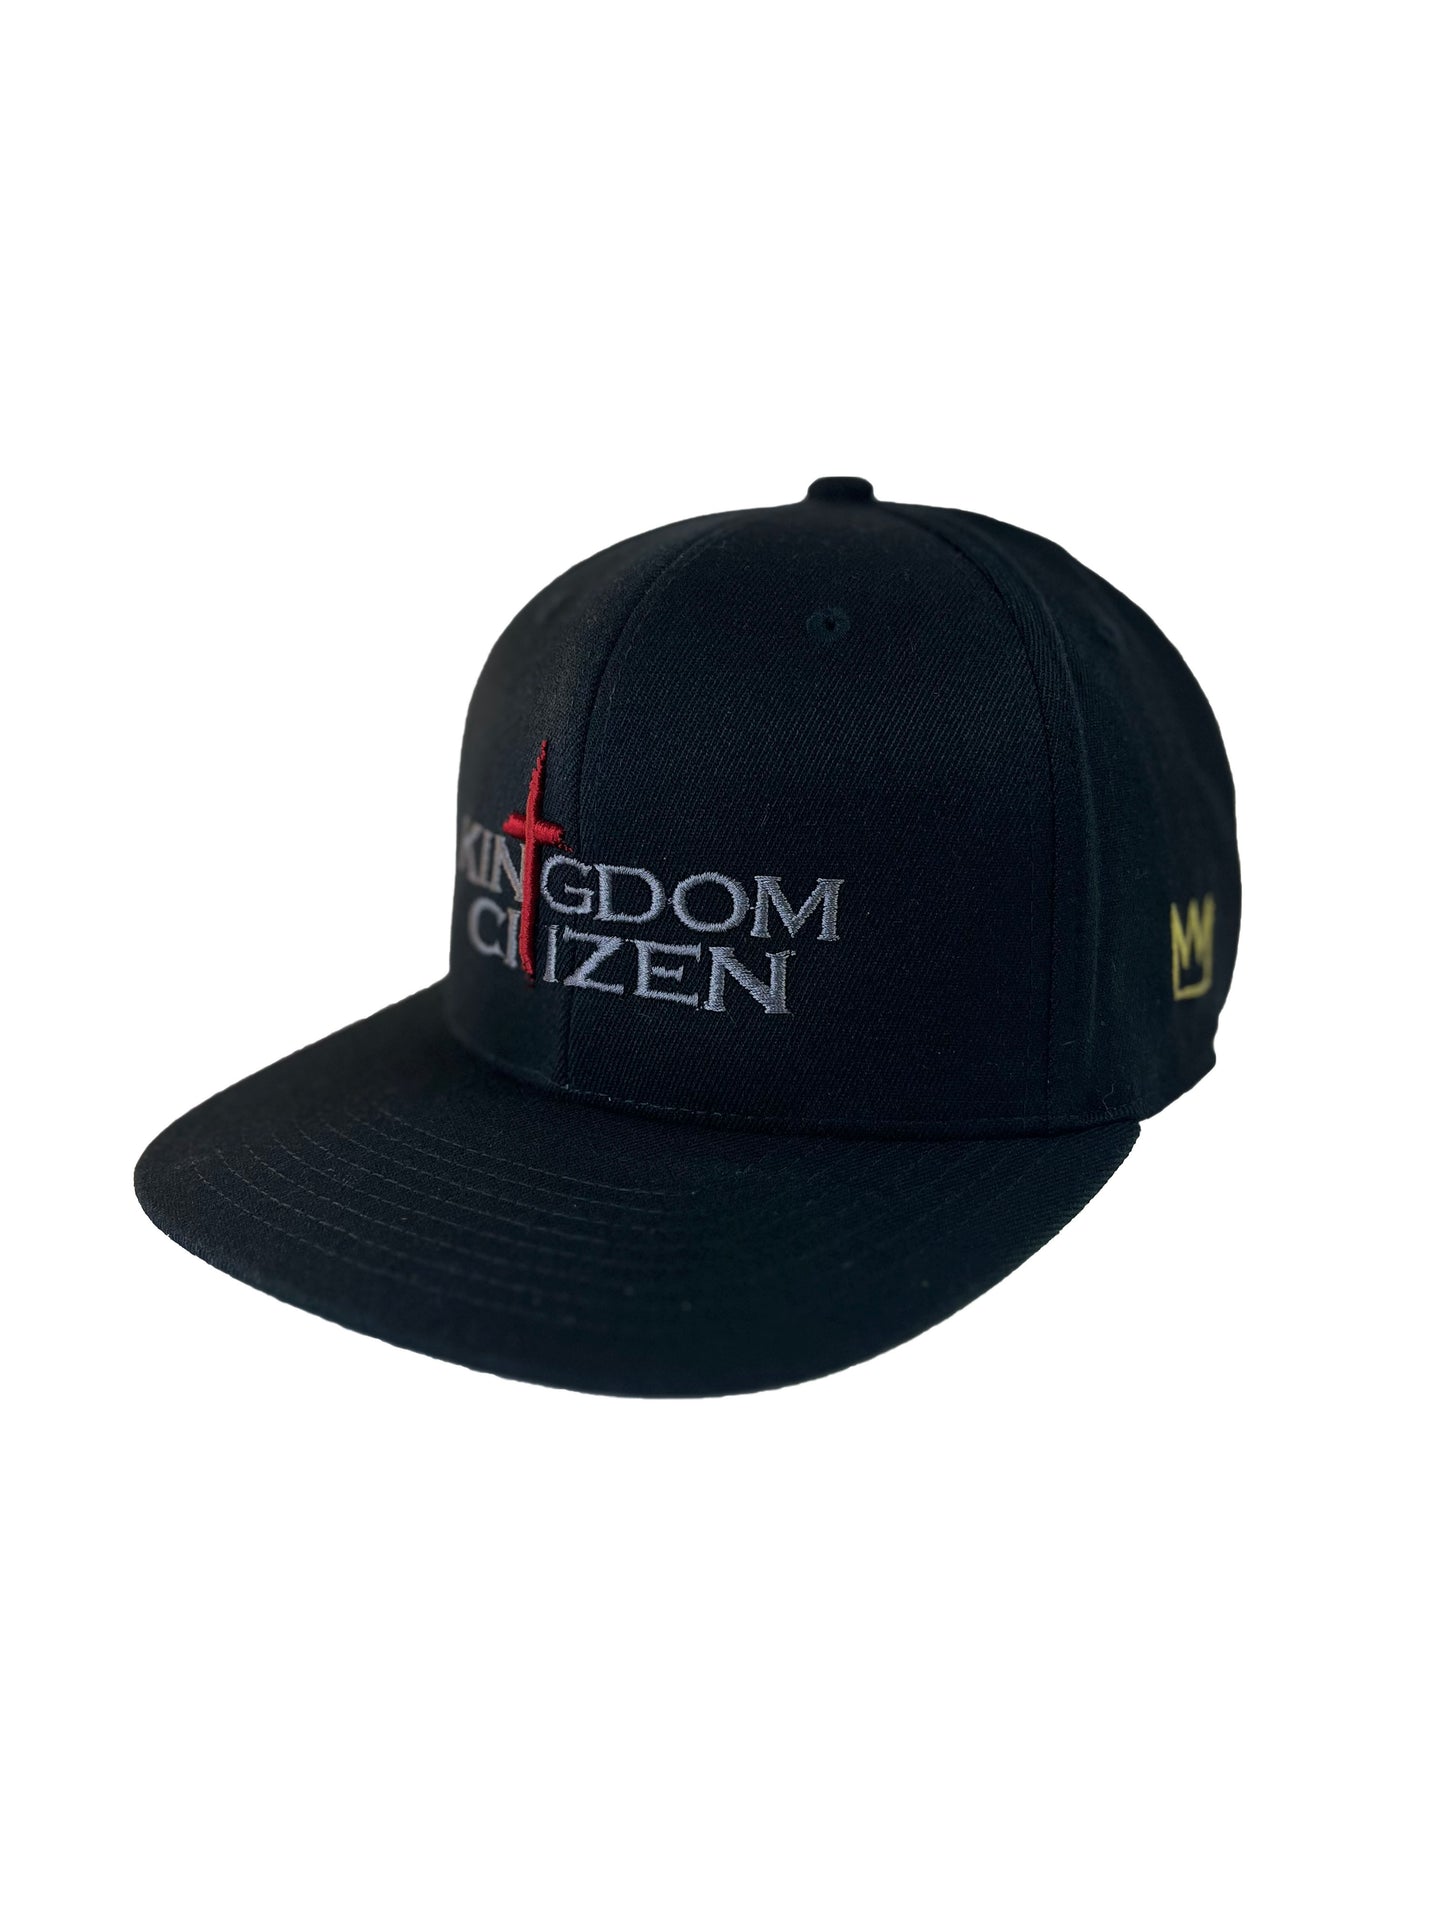 Kingdom Citizen Black hat